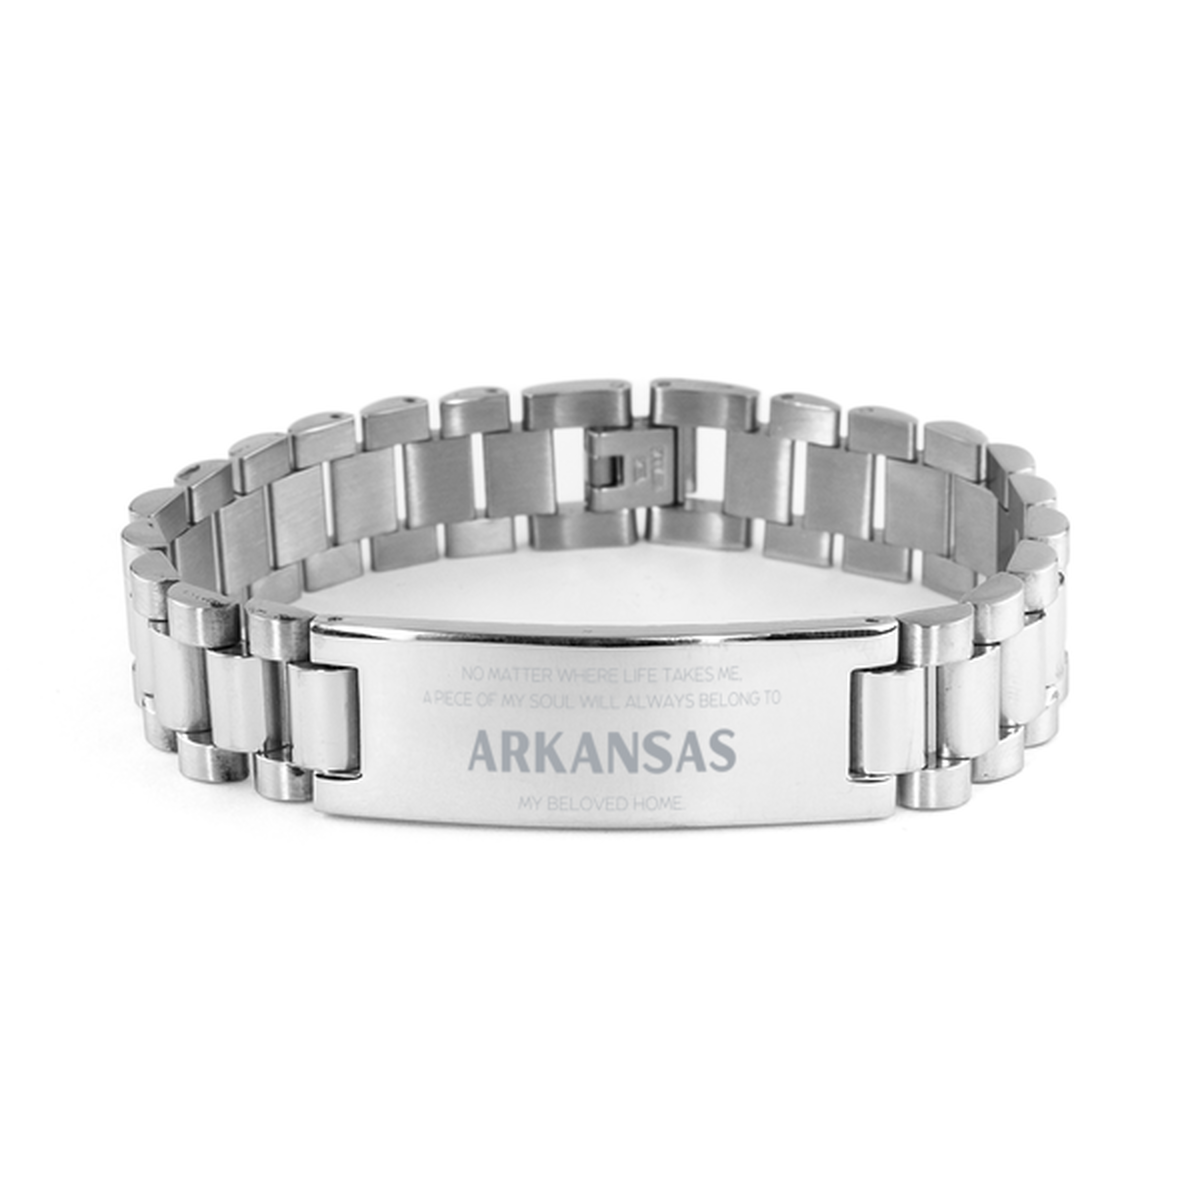 Love Arkansas State Gifts, My soul will always belong to Arkansas, Proud Ladder Stainless Steel Bracelet, Birthday Unique Gifts For Arkansas Men, Women, Friends